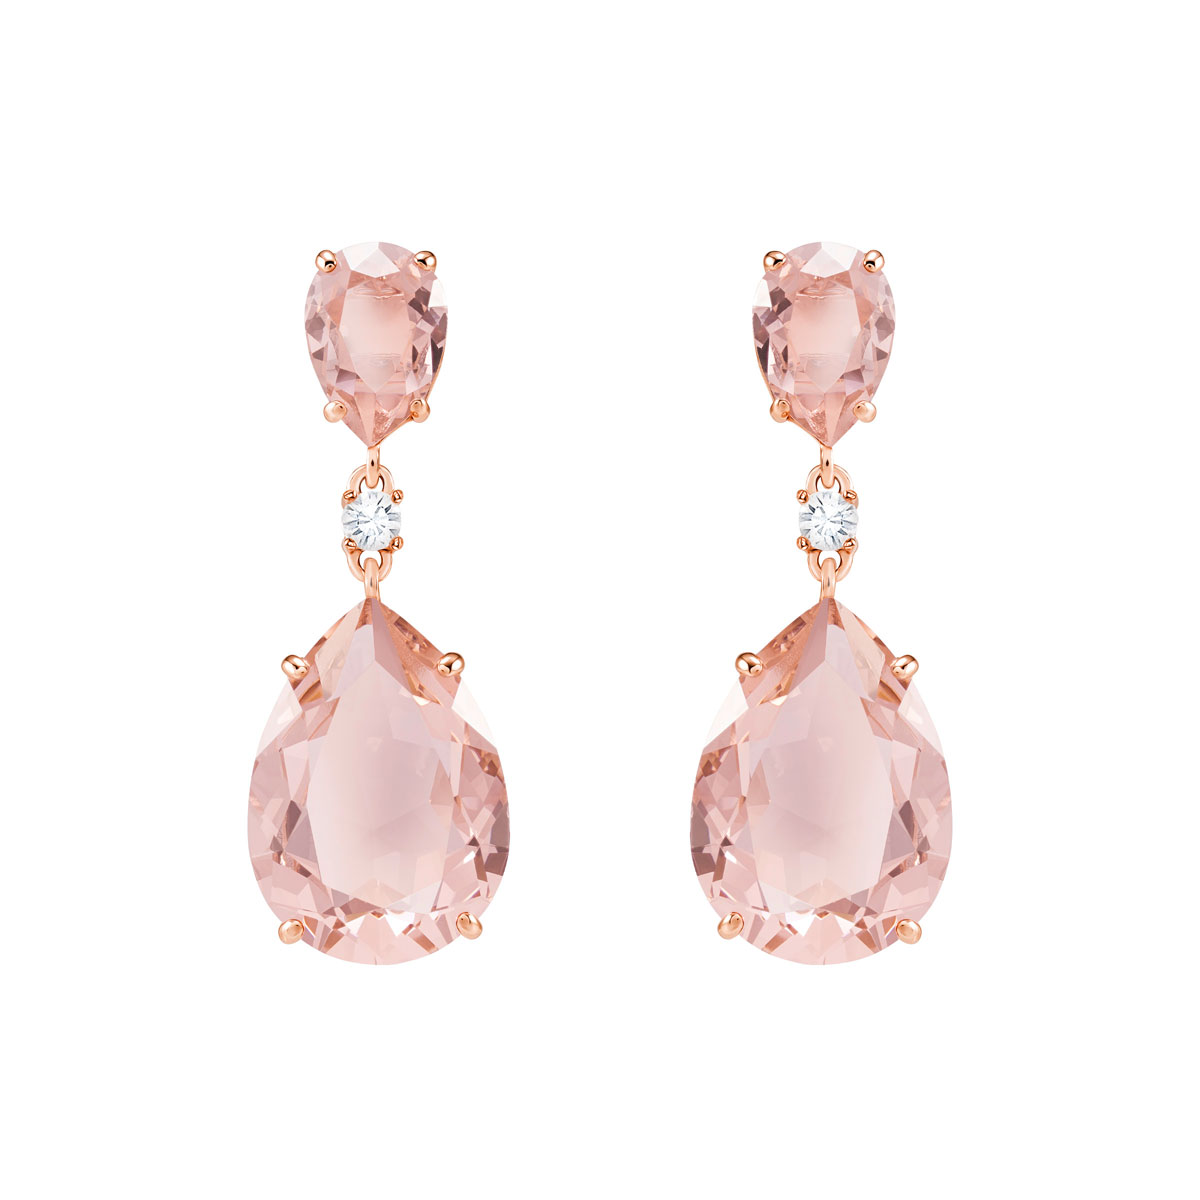 Swarovski Vintage Drop Pierced Earrings, Pink, Rose Gold